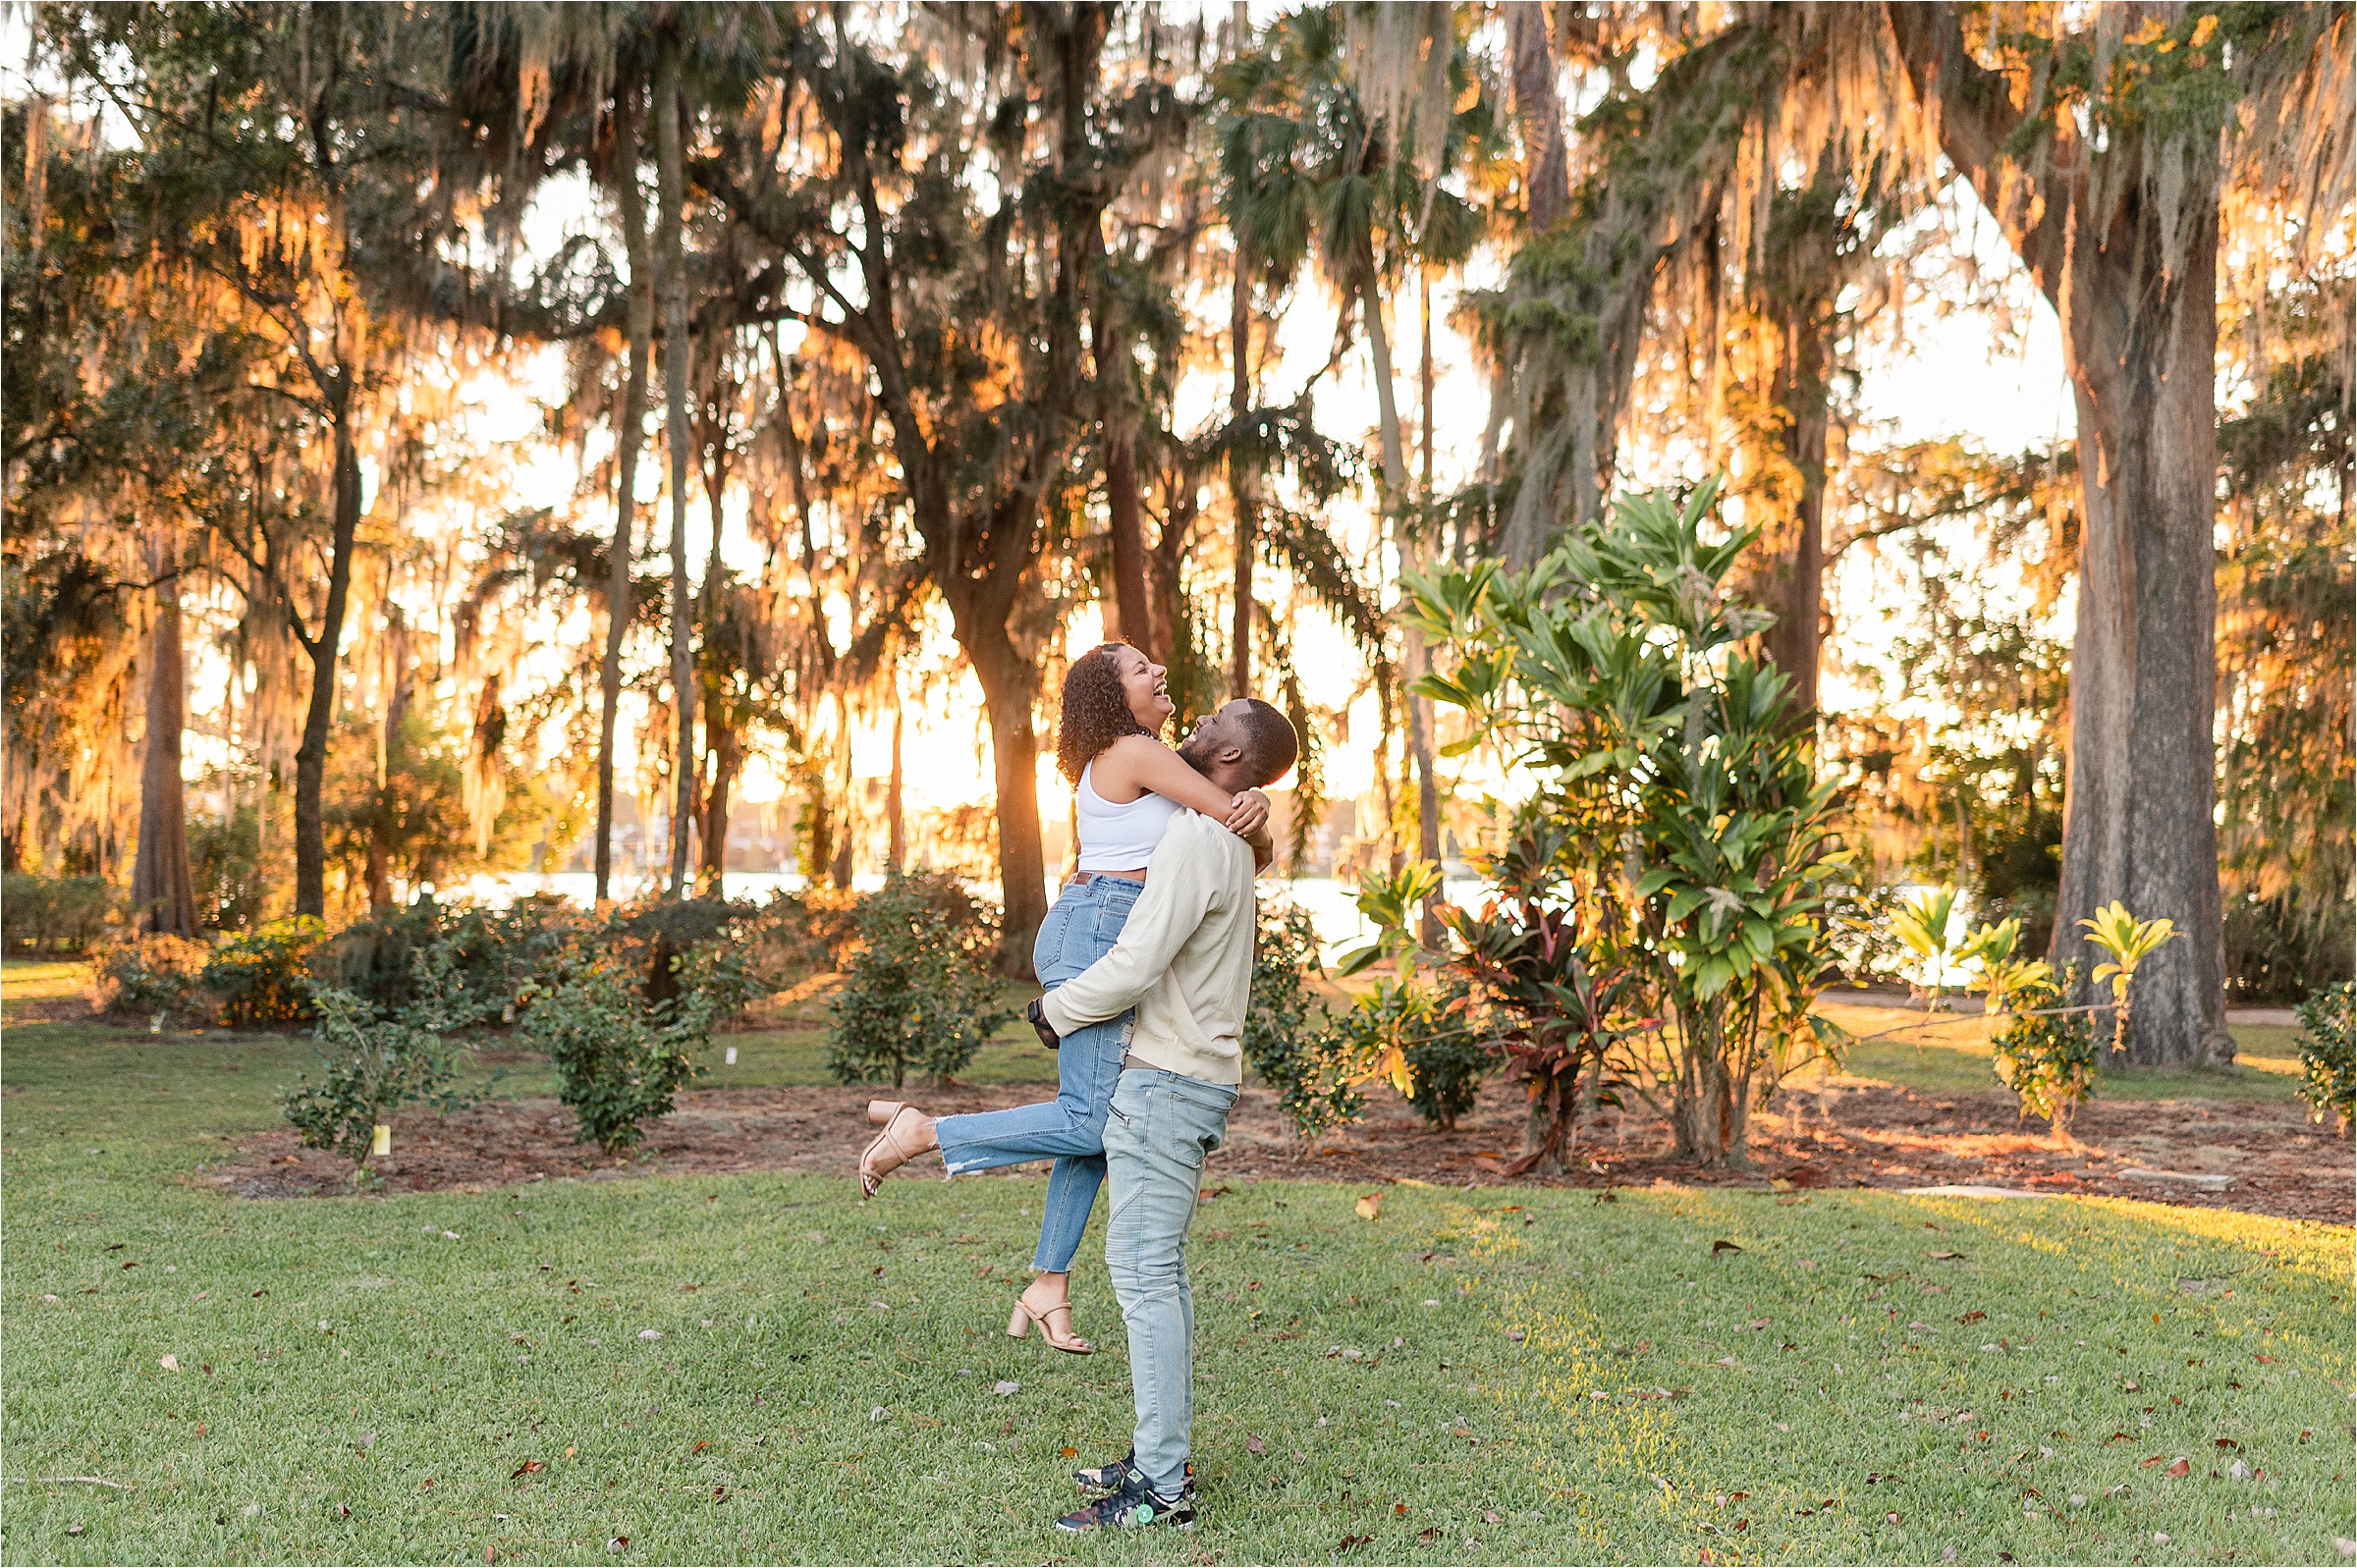 Fun Engagement Photos | Kraft Azalea Gardens Winter Park, FL